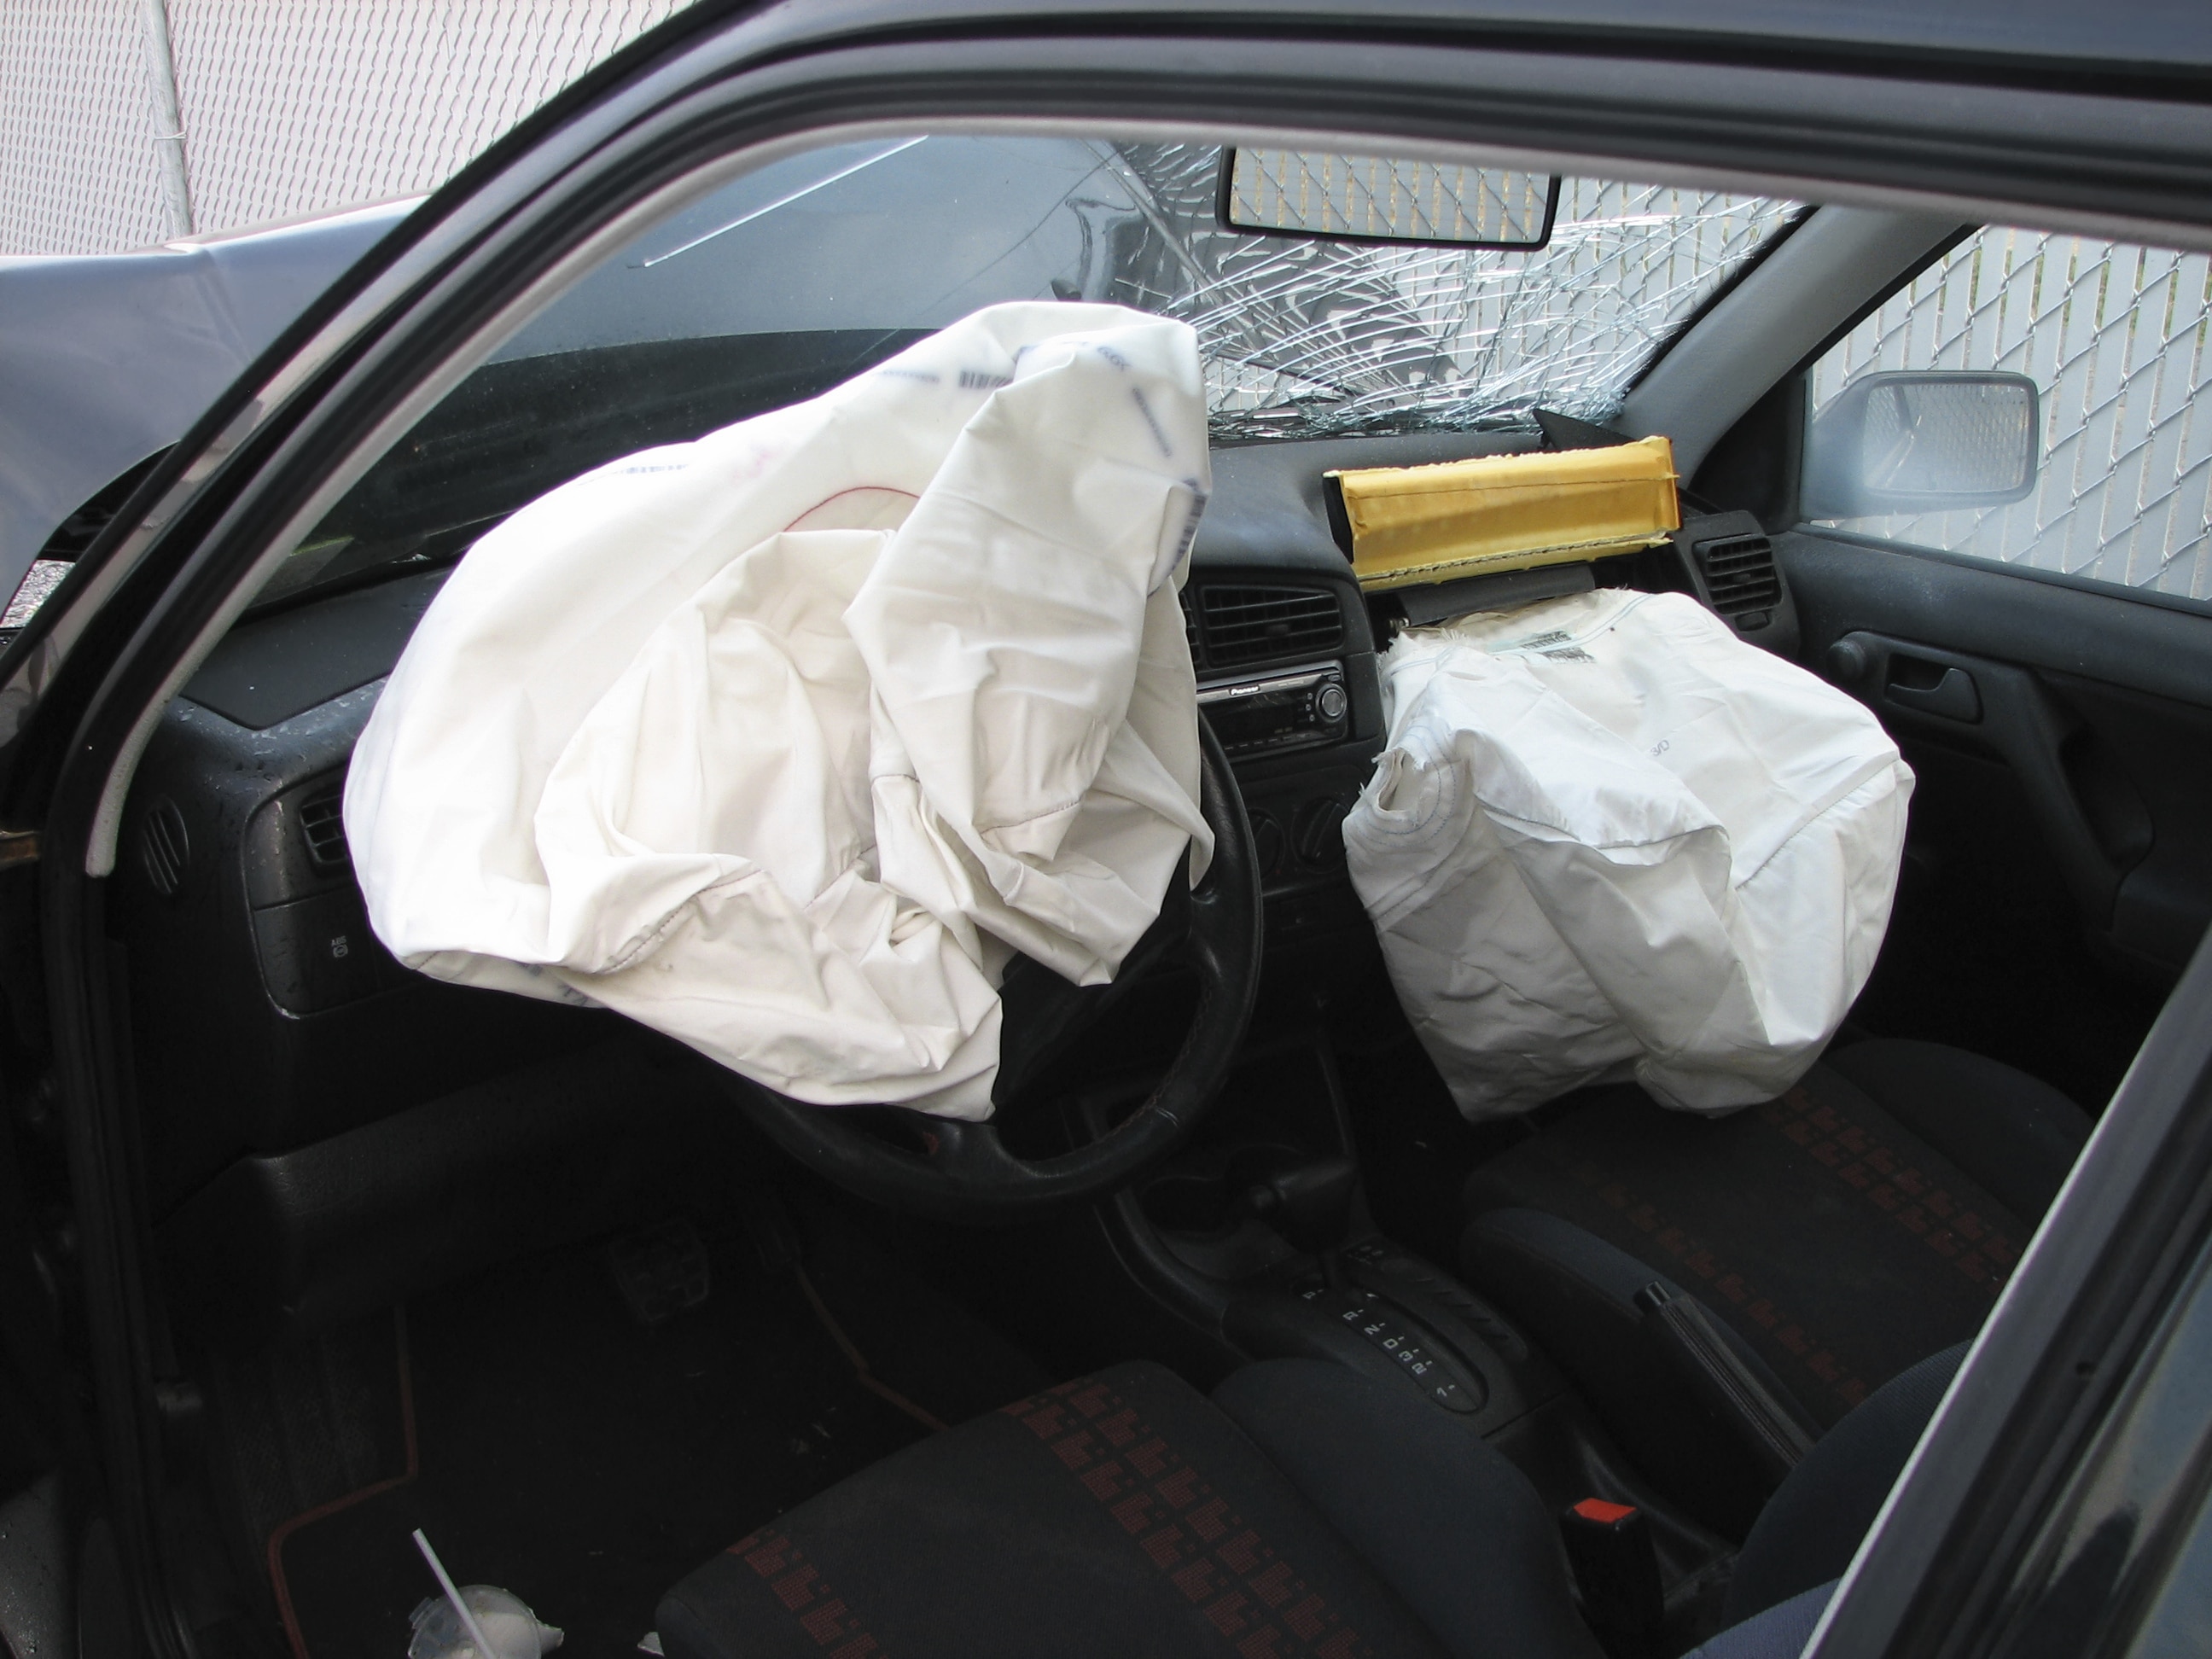 Airbag recall